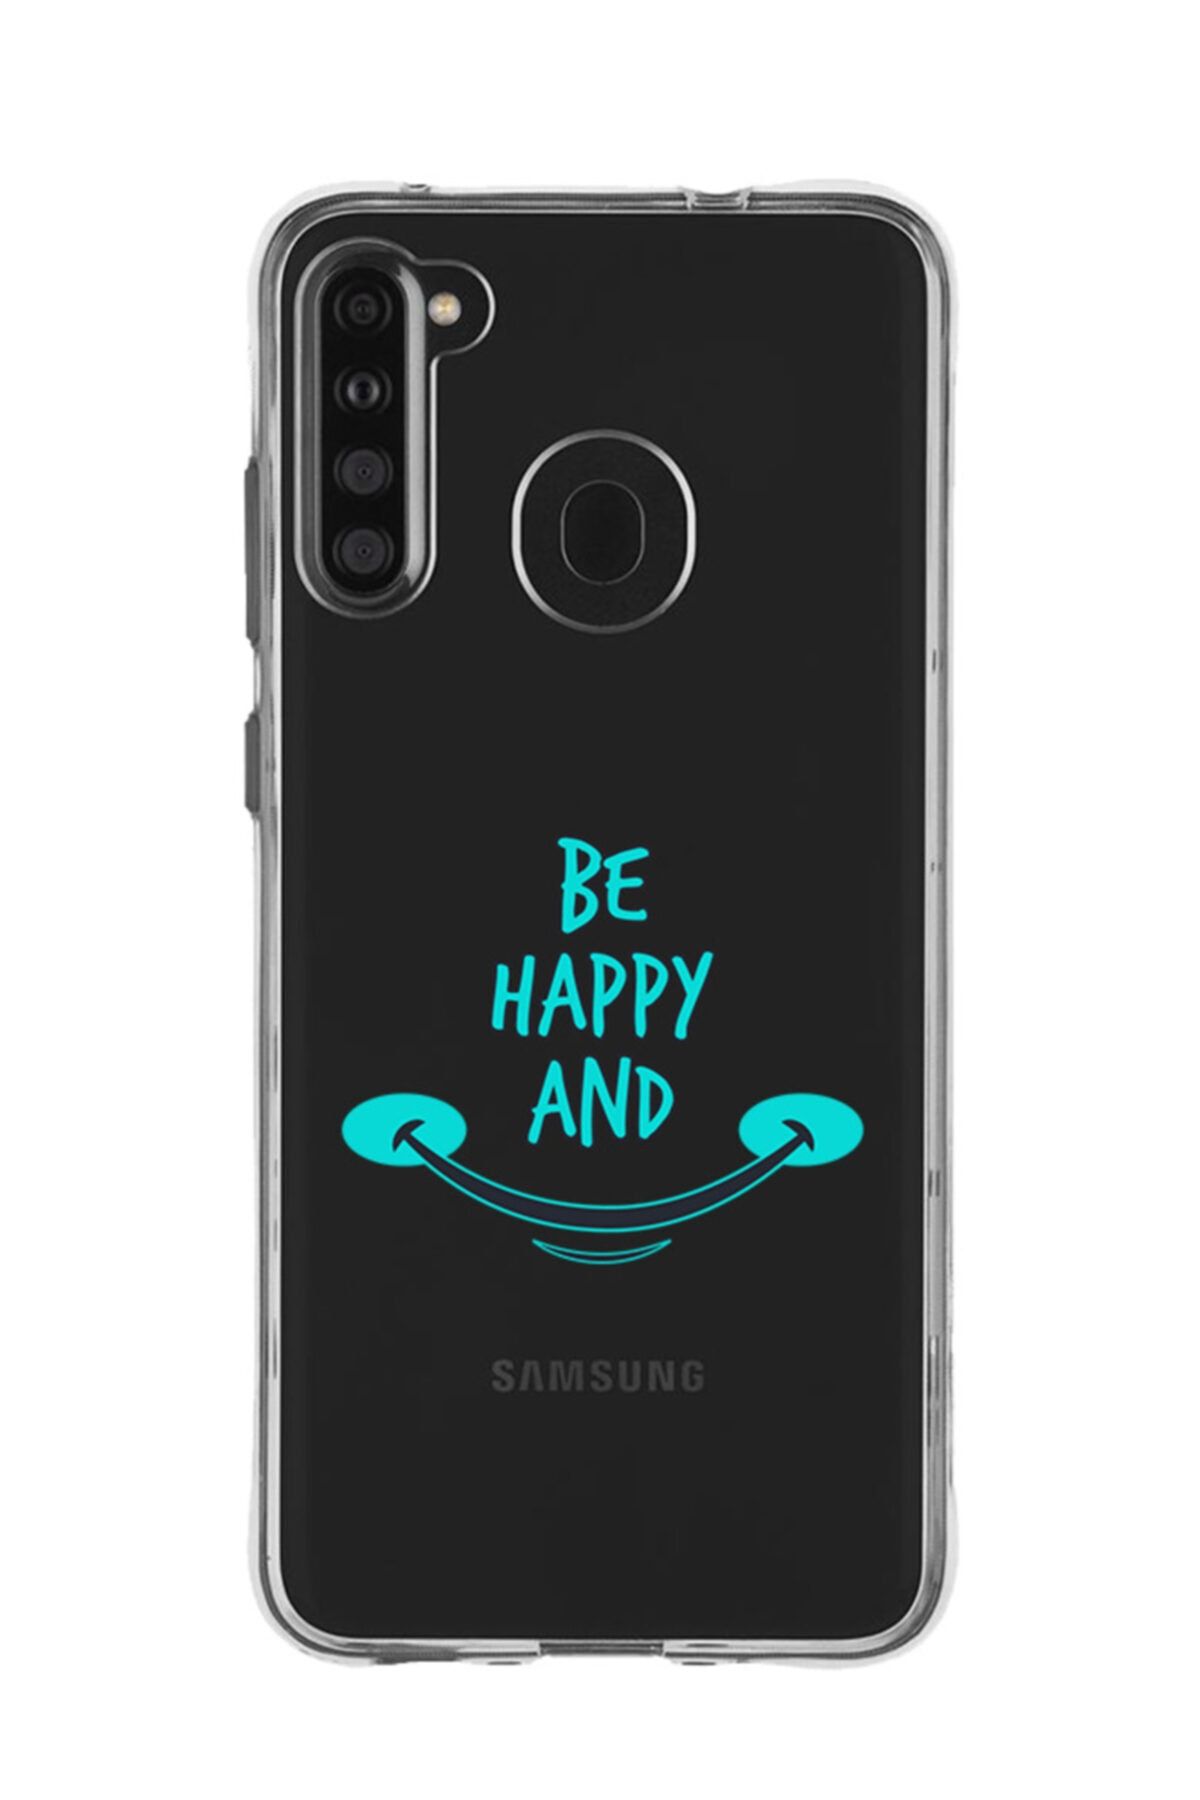 Dafhi Aksesuar Dafhi Samsung Galaxy A21 Be Happy And Telefon Kılıfı